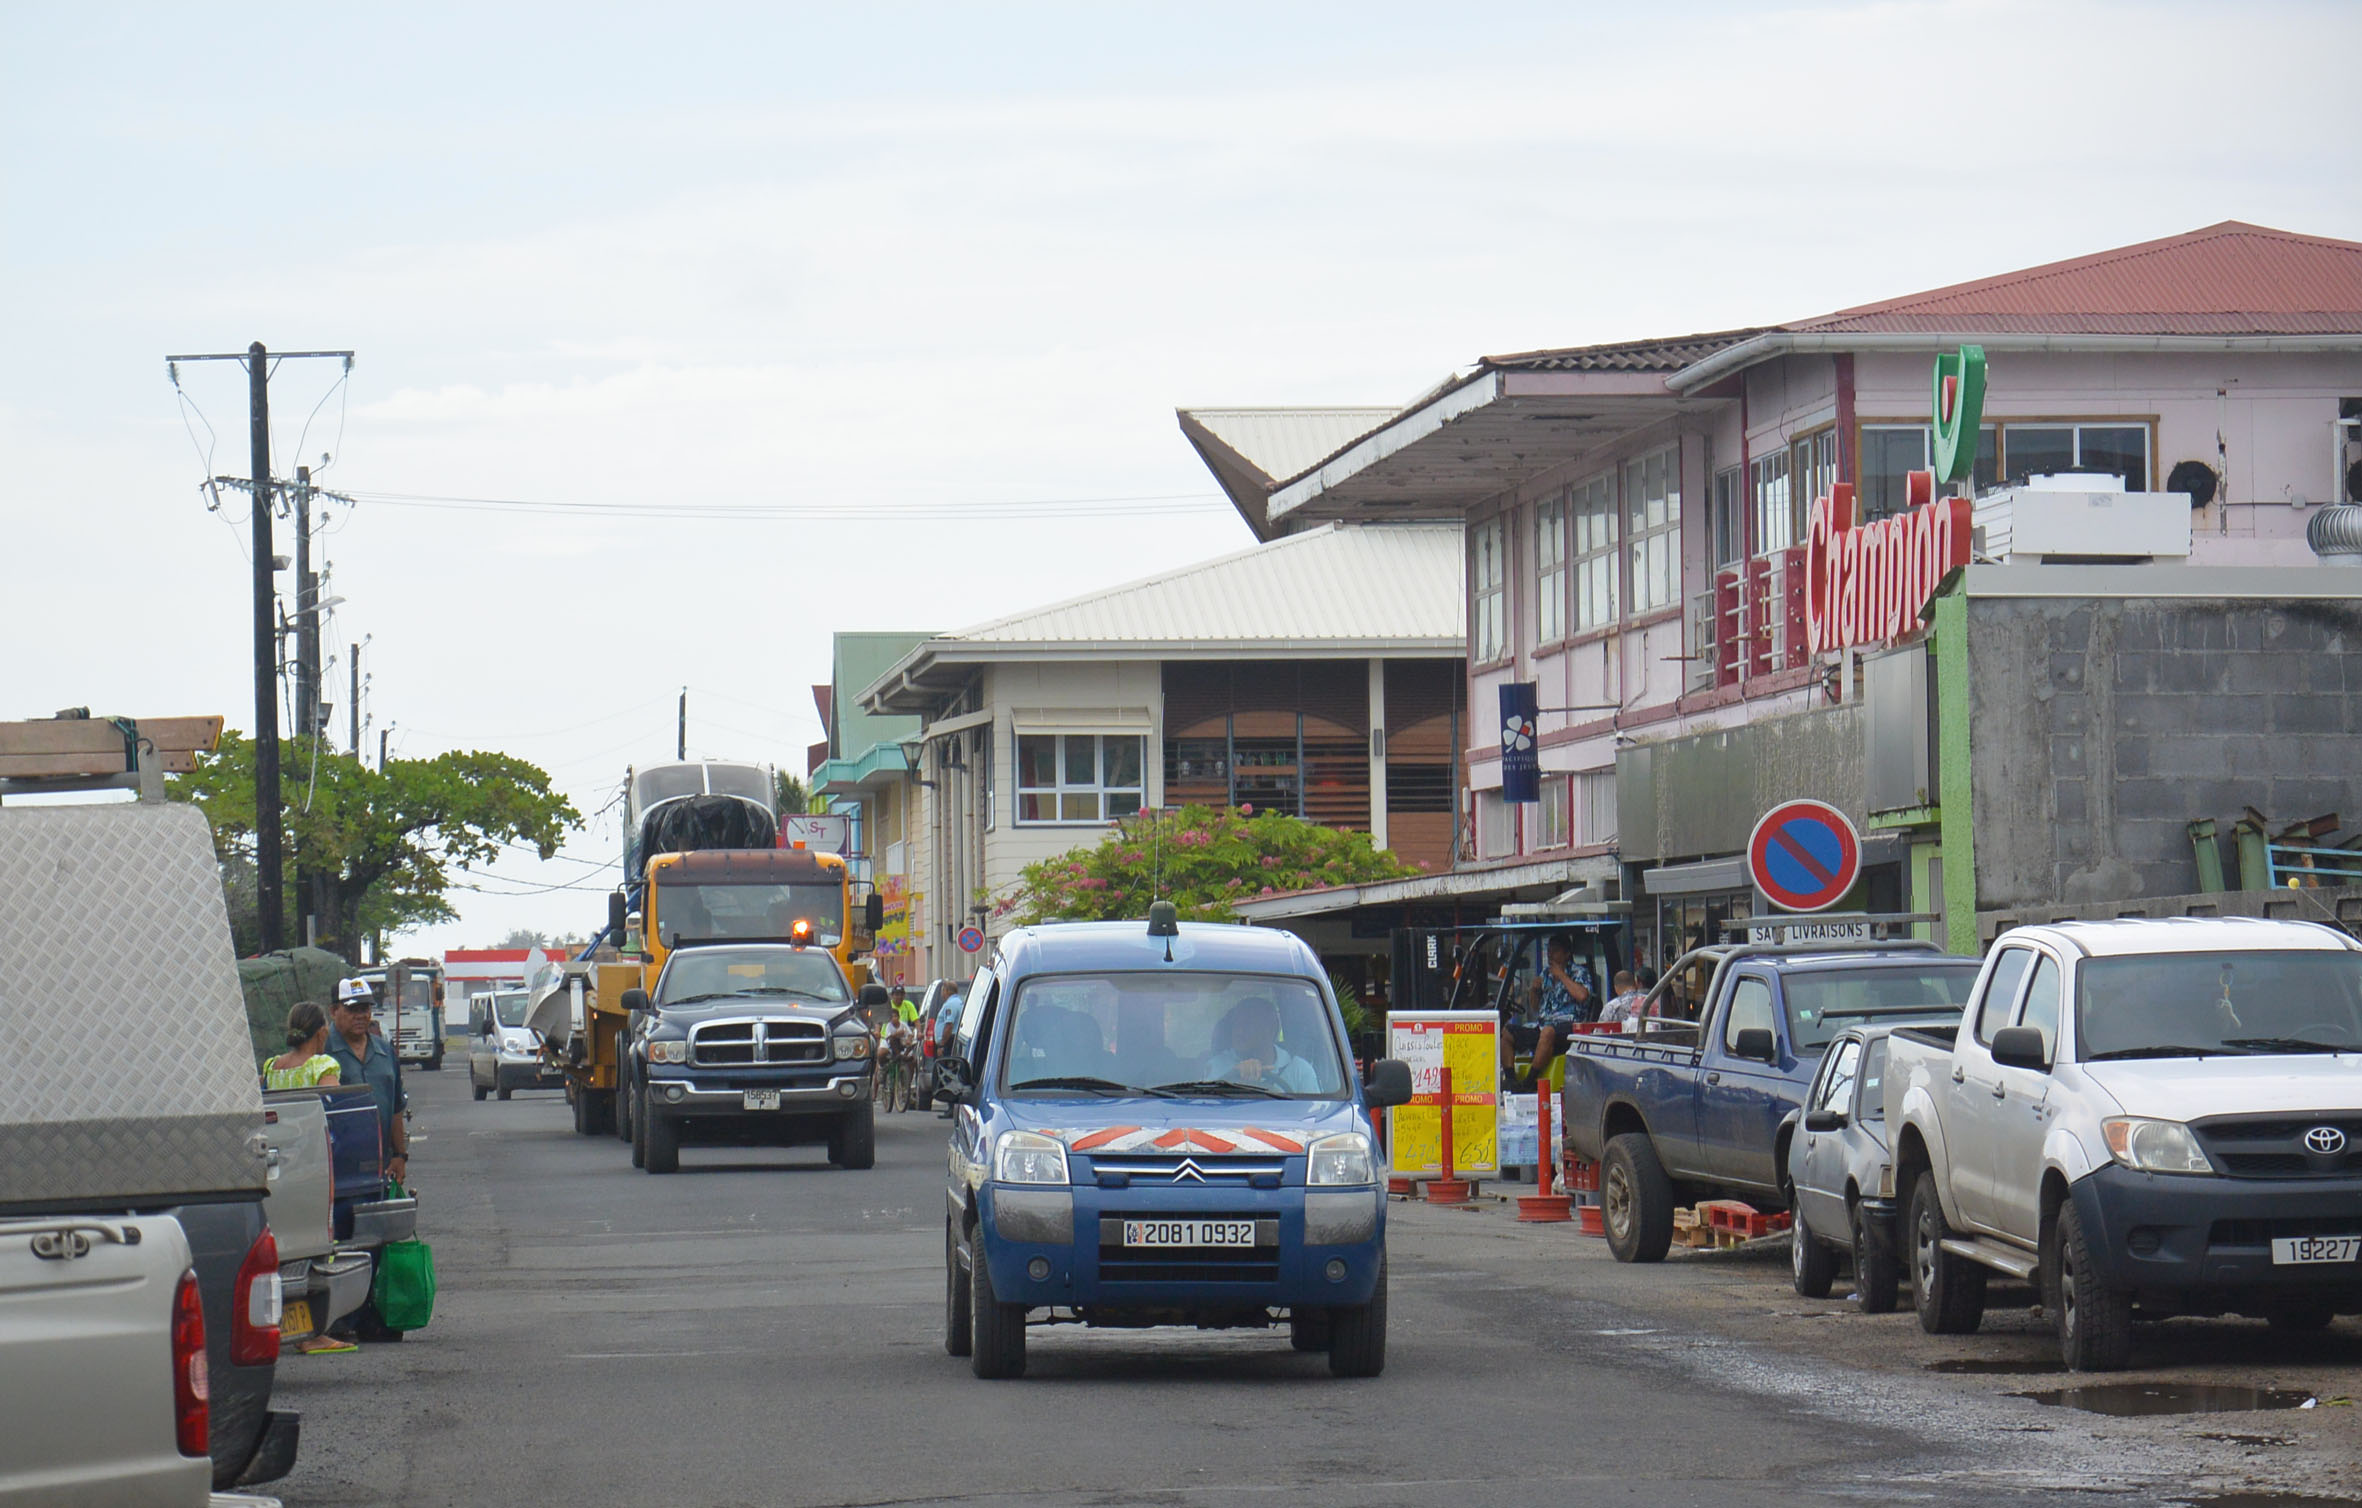 le convoi exceptionnel traverse Uturoa, une scène peu fréquente à Raiatea